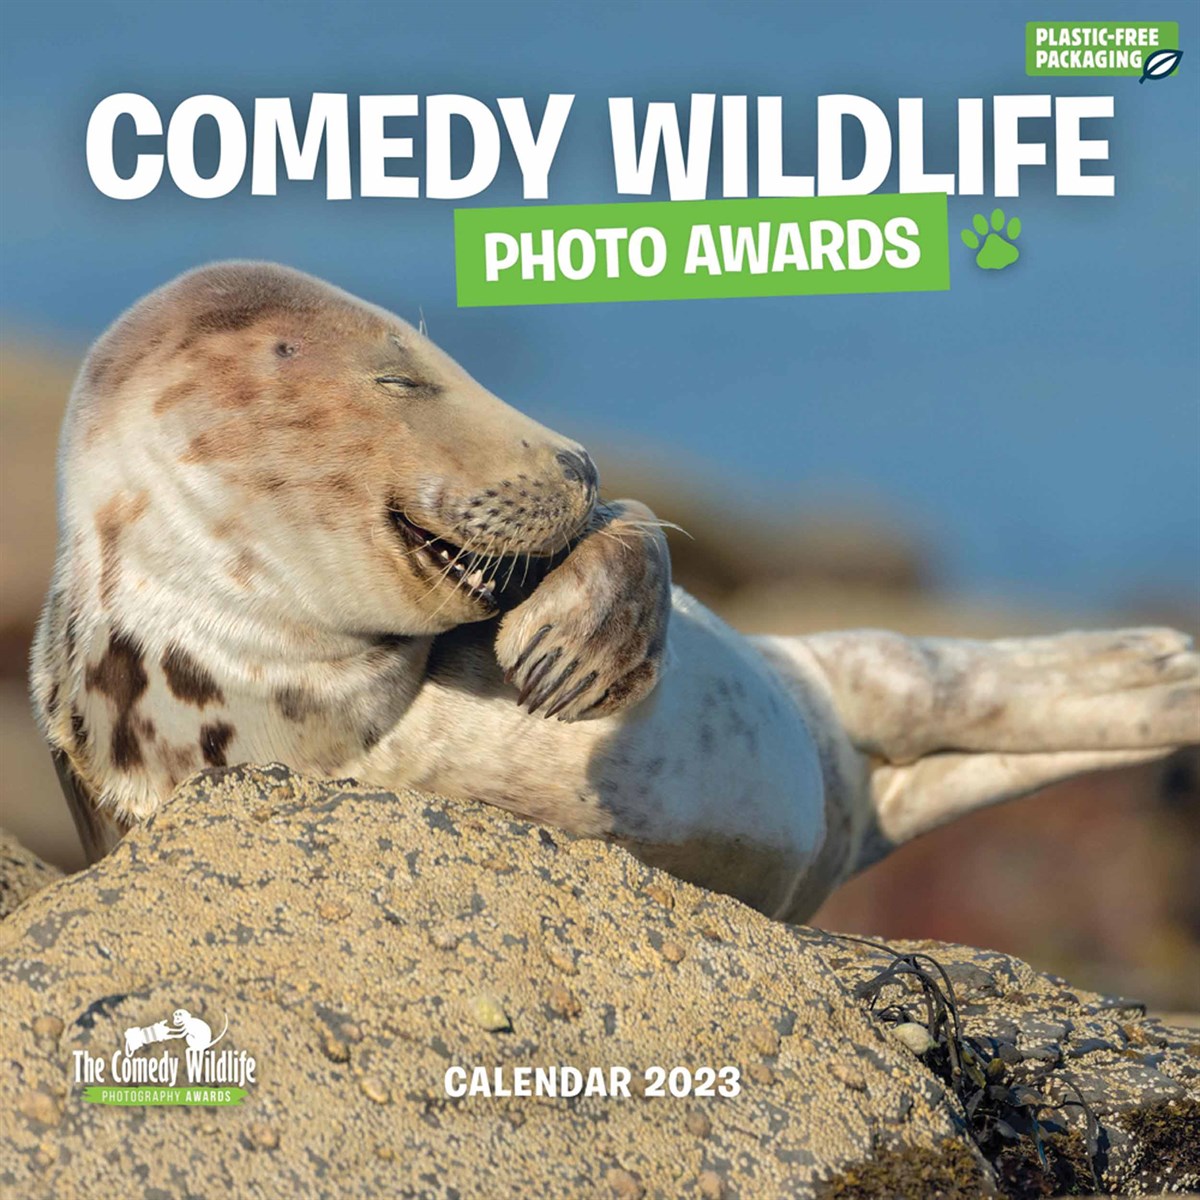 Comedy Wildlife Photography Awards 2023 Calendars